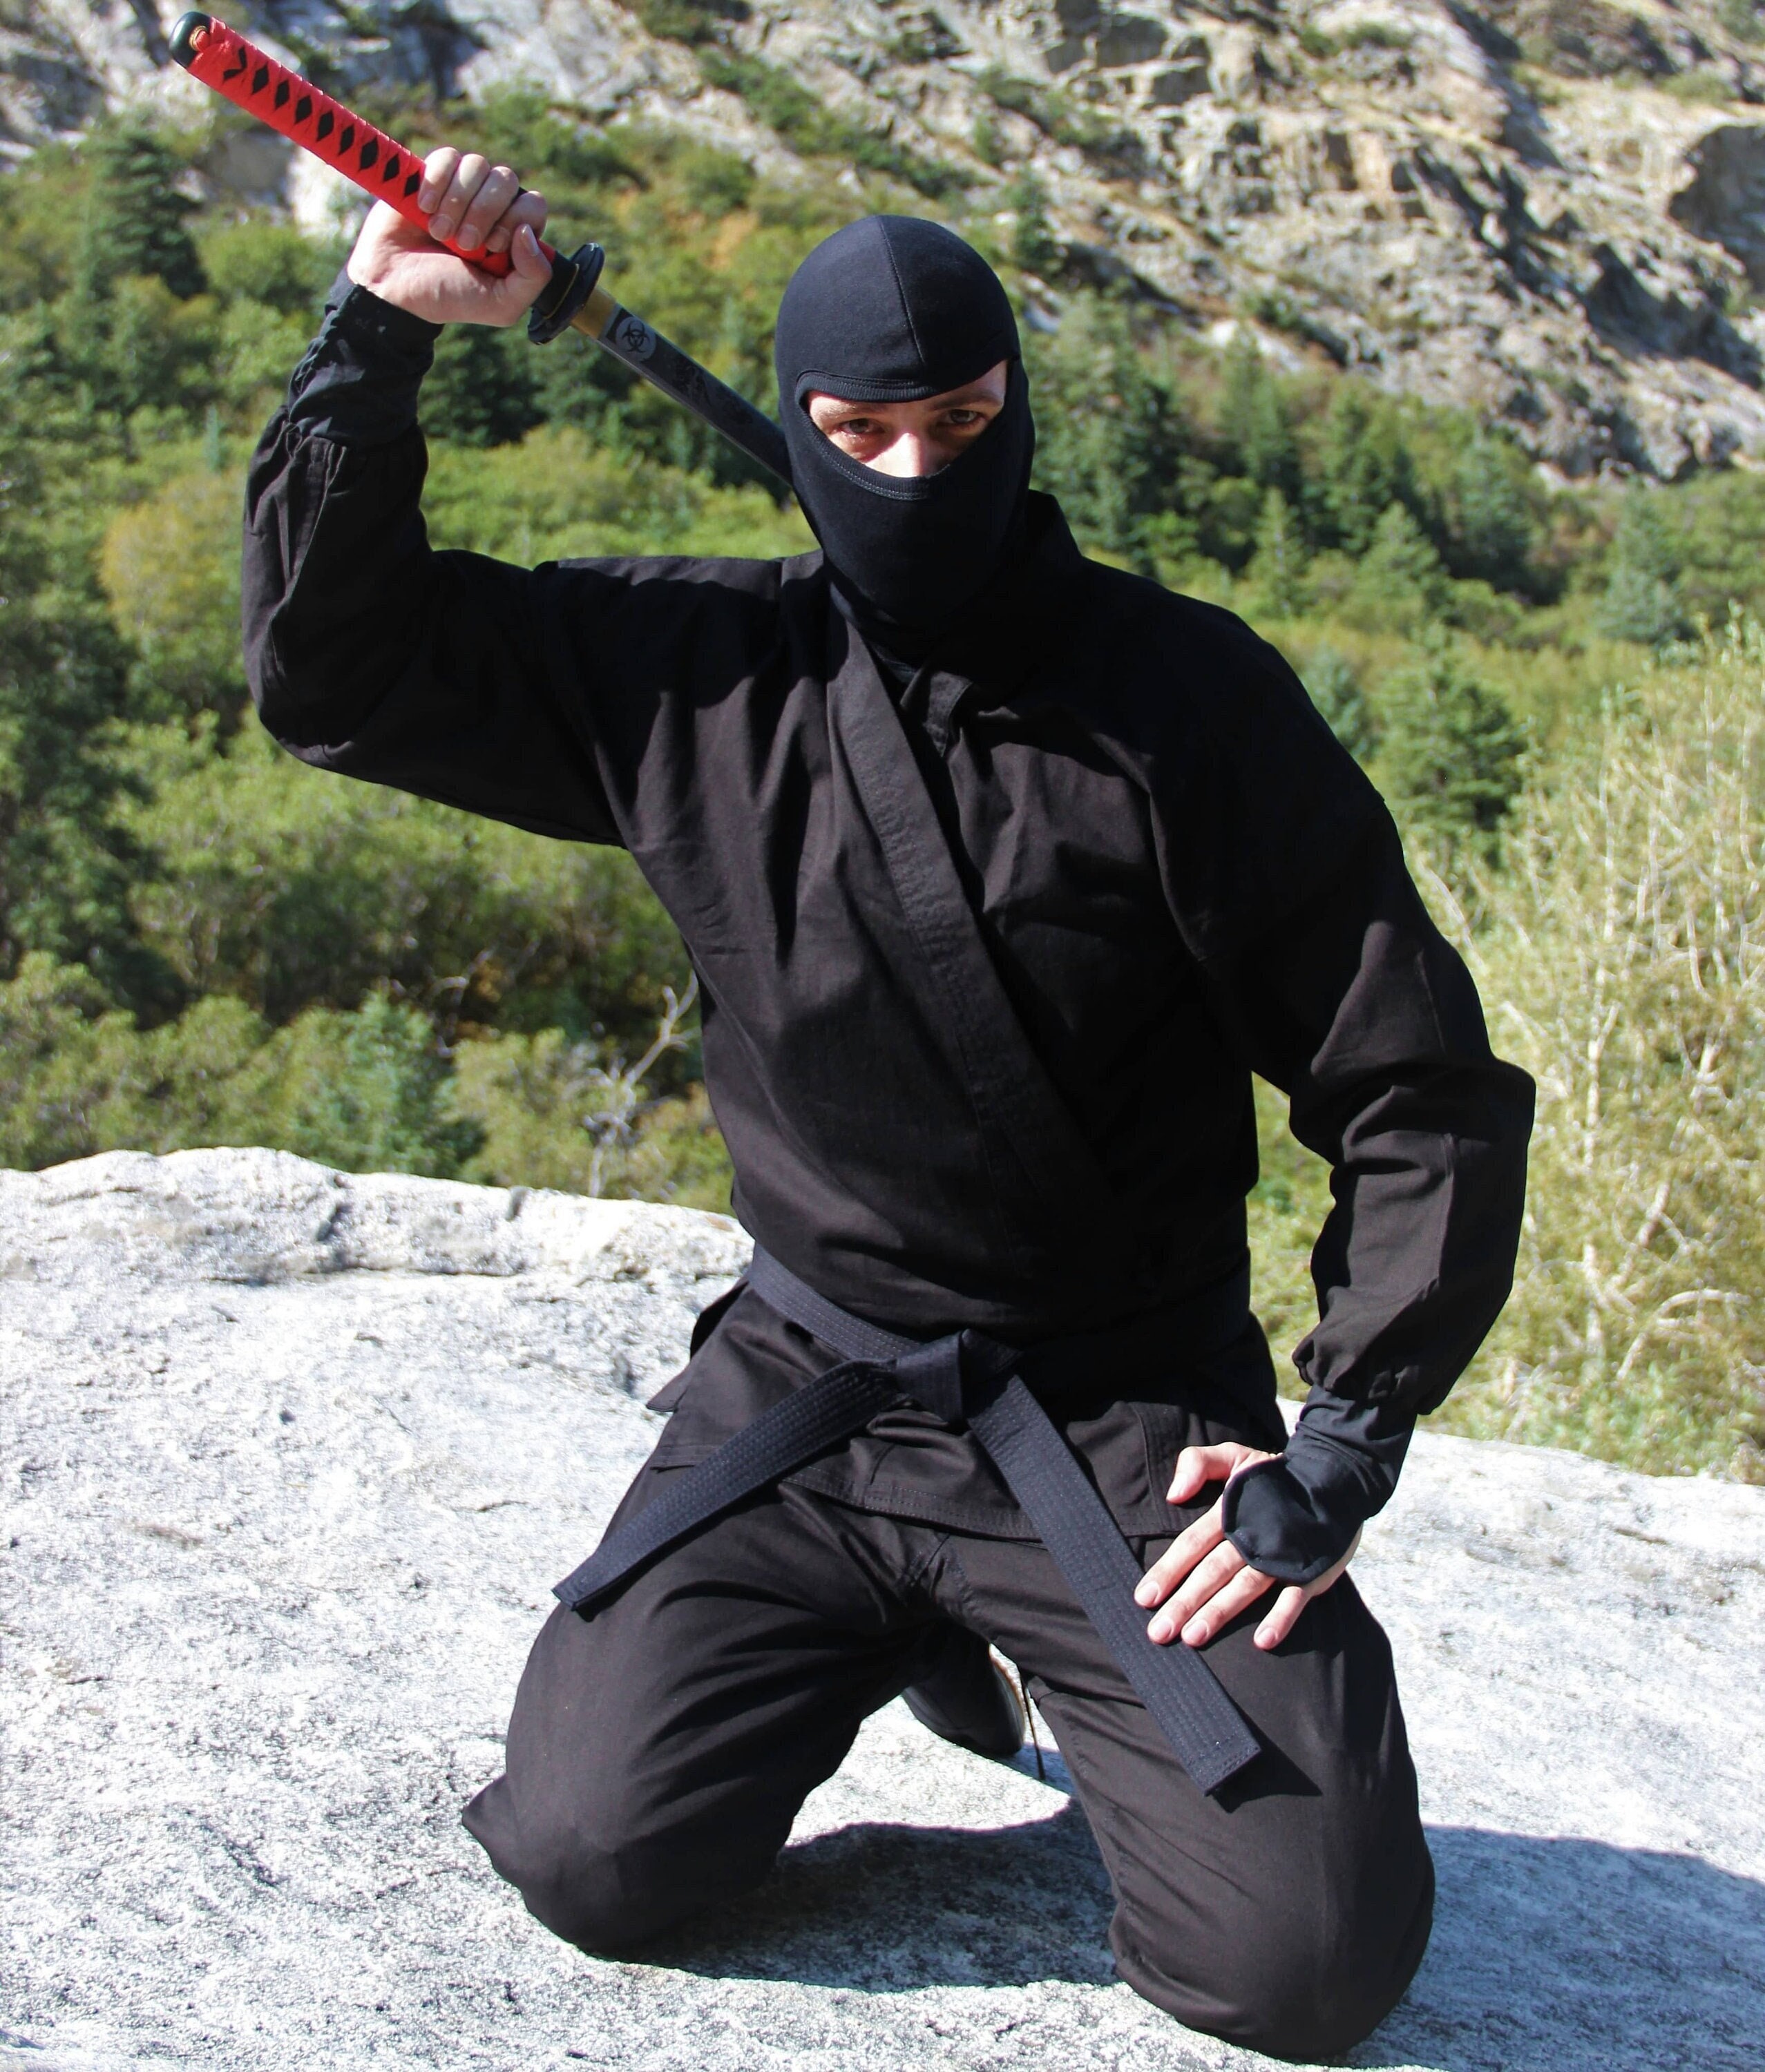 Mens Plus Size Ninja Costume, Ninja Costum Men